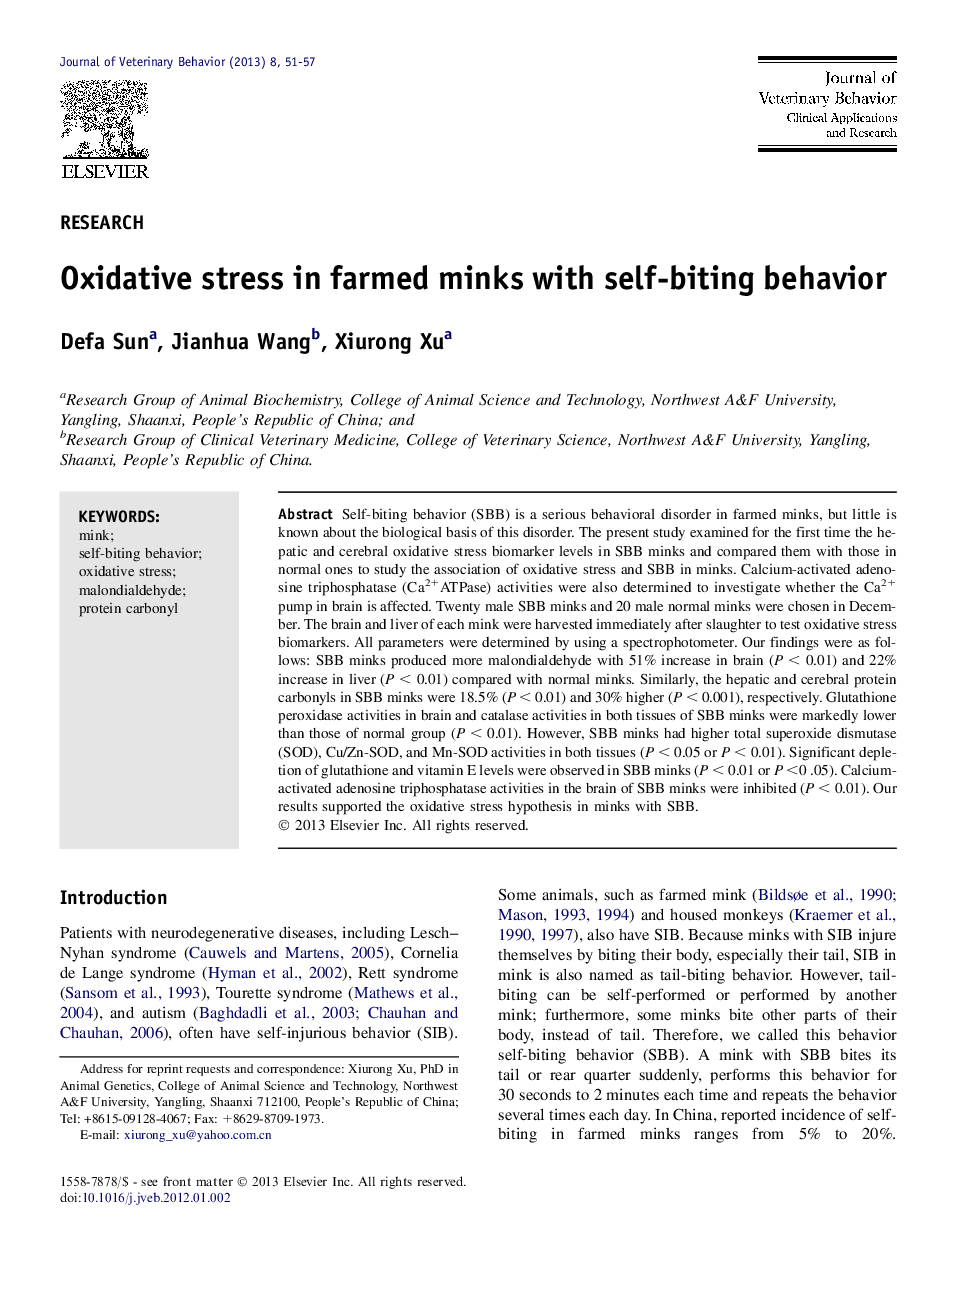 Oxidative stress in farmed minks with self-biting behavior